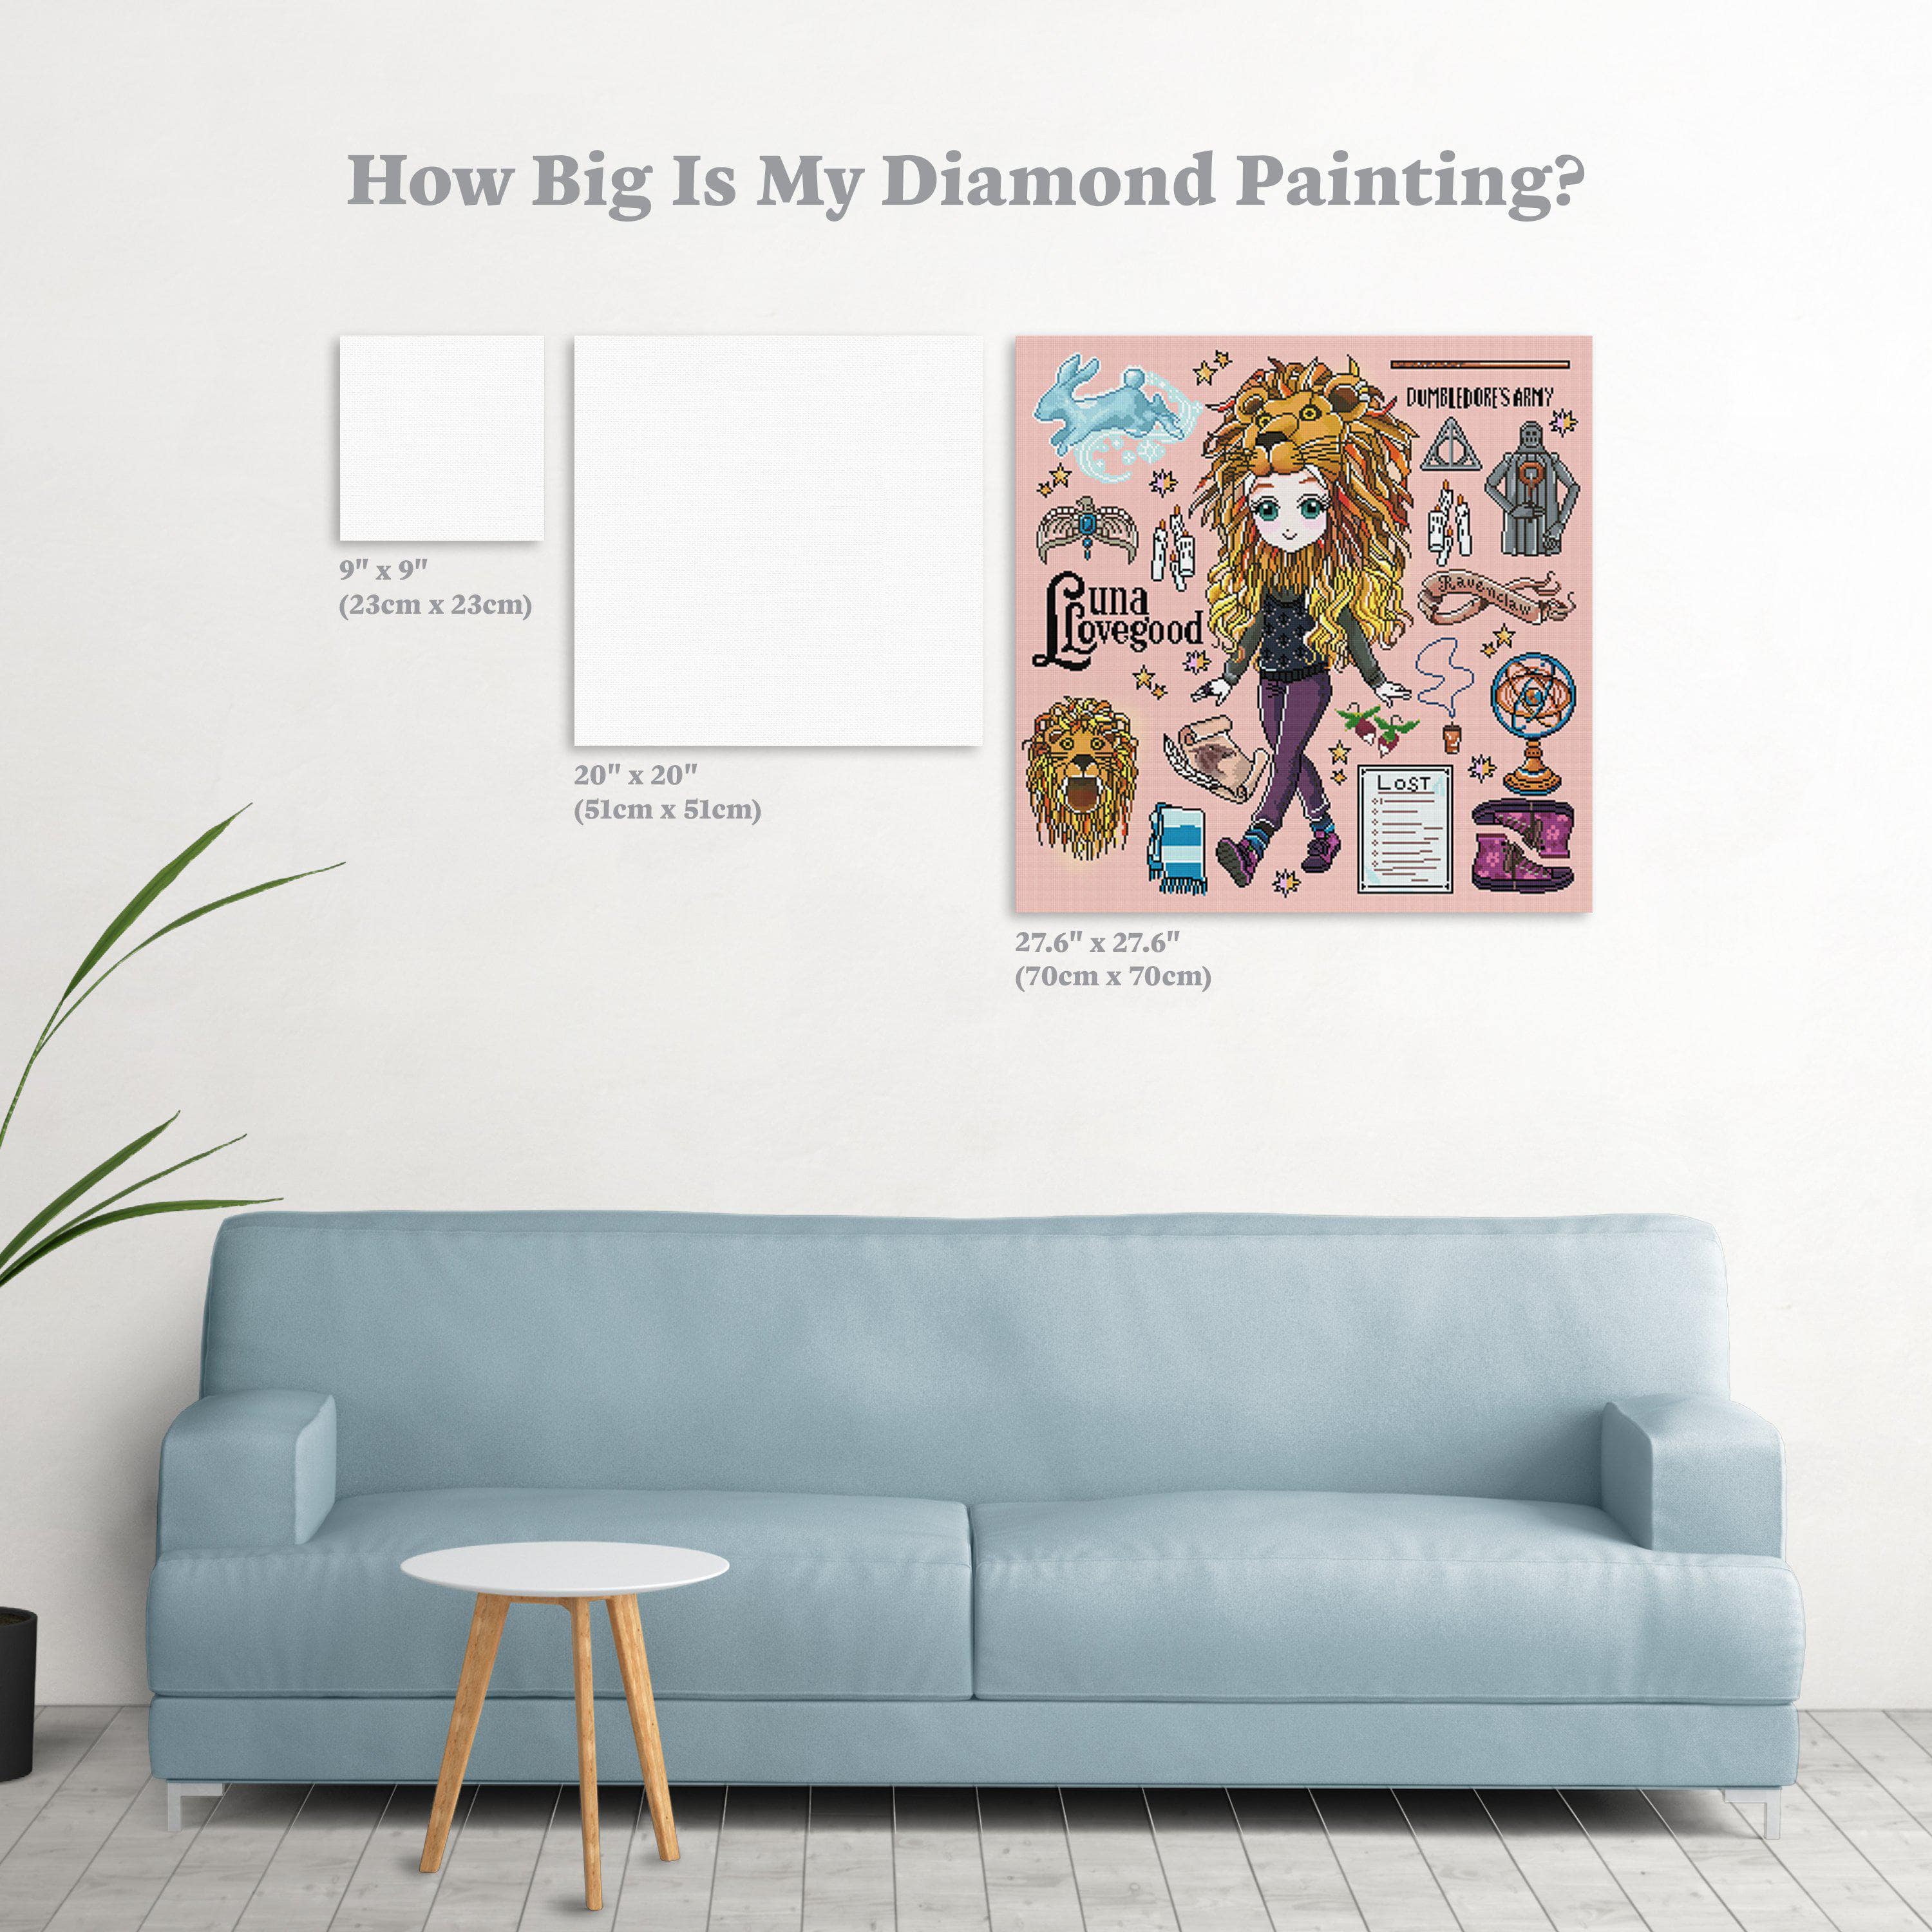 Diamond Painting - I love it! - Monicas Creative Room